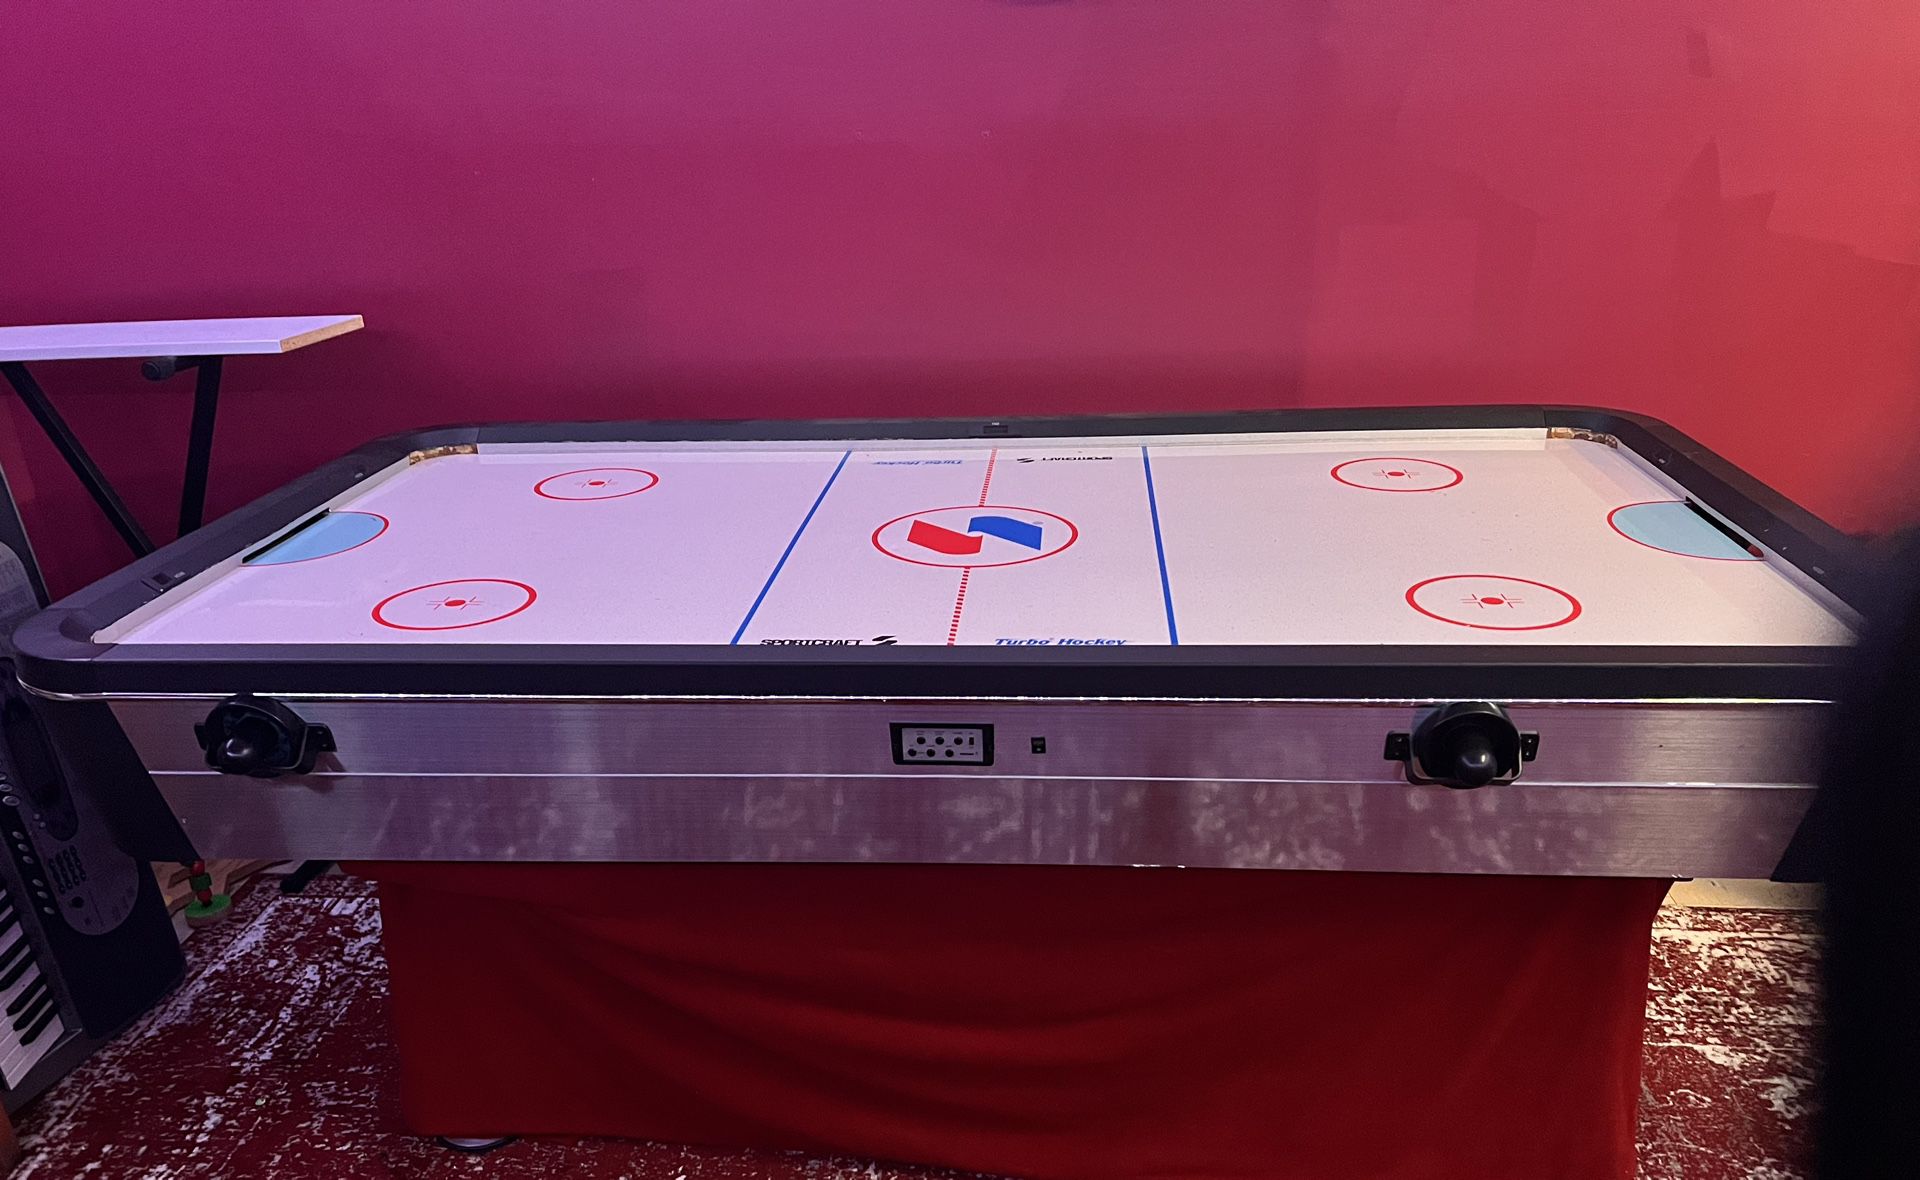 Electric Air Hockey Table 